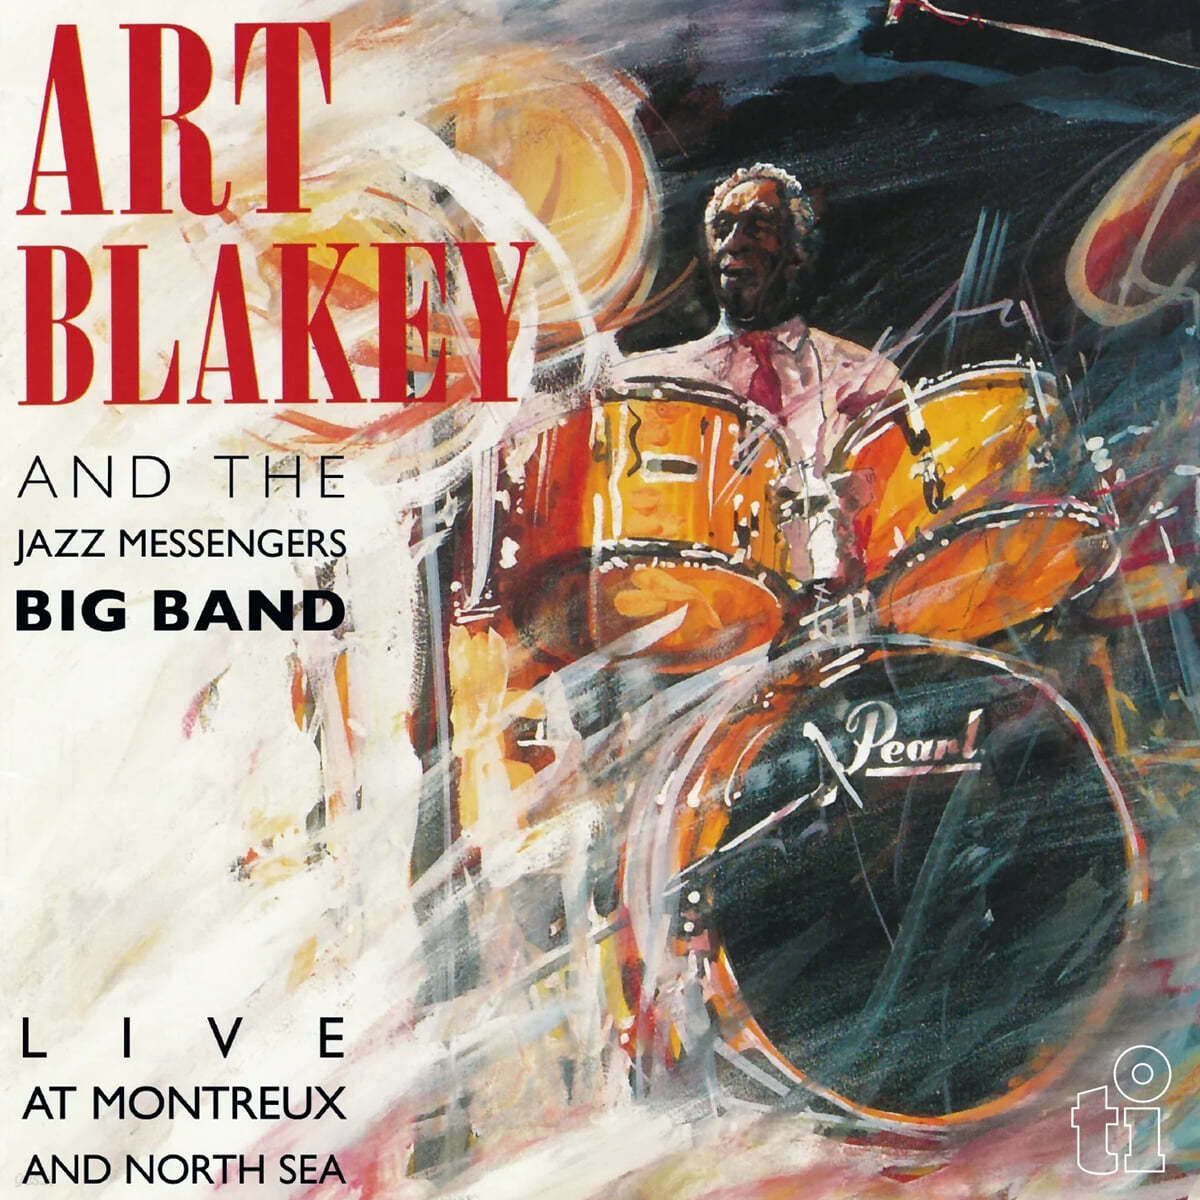 Art Blakey & The Jazz Messengers Big Band (아트 블레이키 앤 더 재즈 메신저스 빅 밴드) - Live At Montreaux And North Sea [LP]